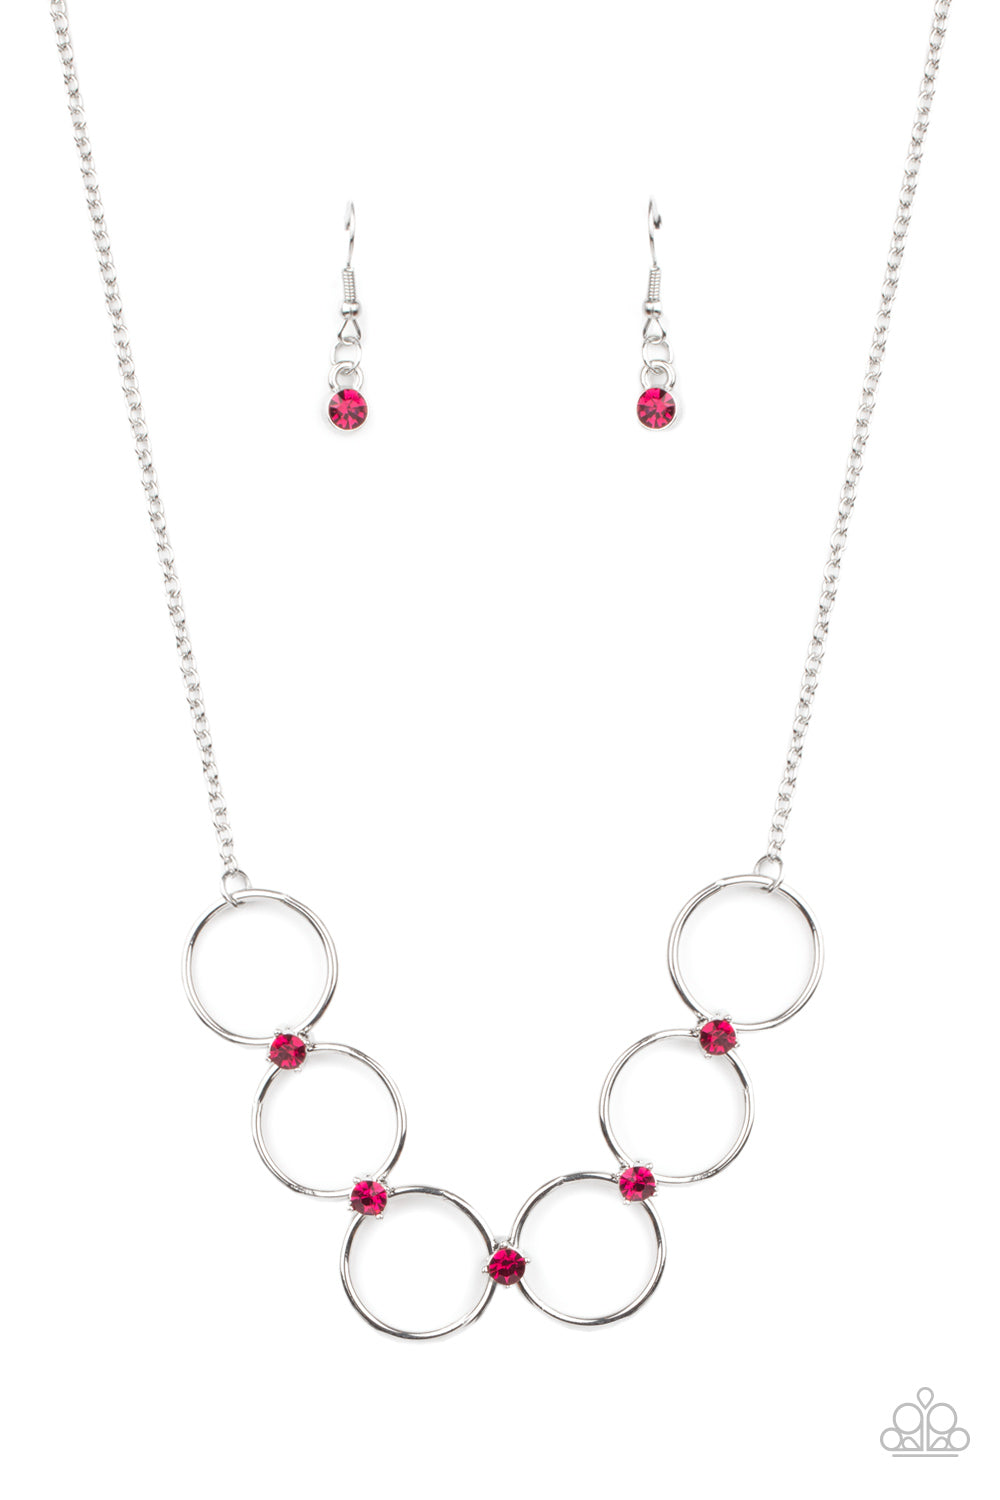 Regal Society - Pink Necklace freeshipping - JewLz4u Gemstone Gallery